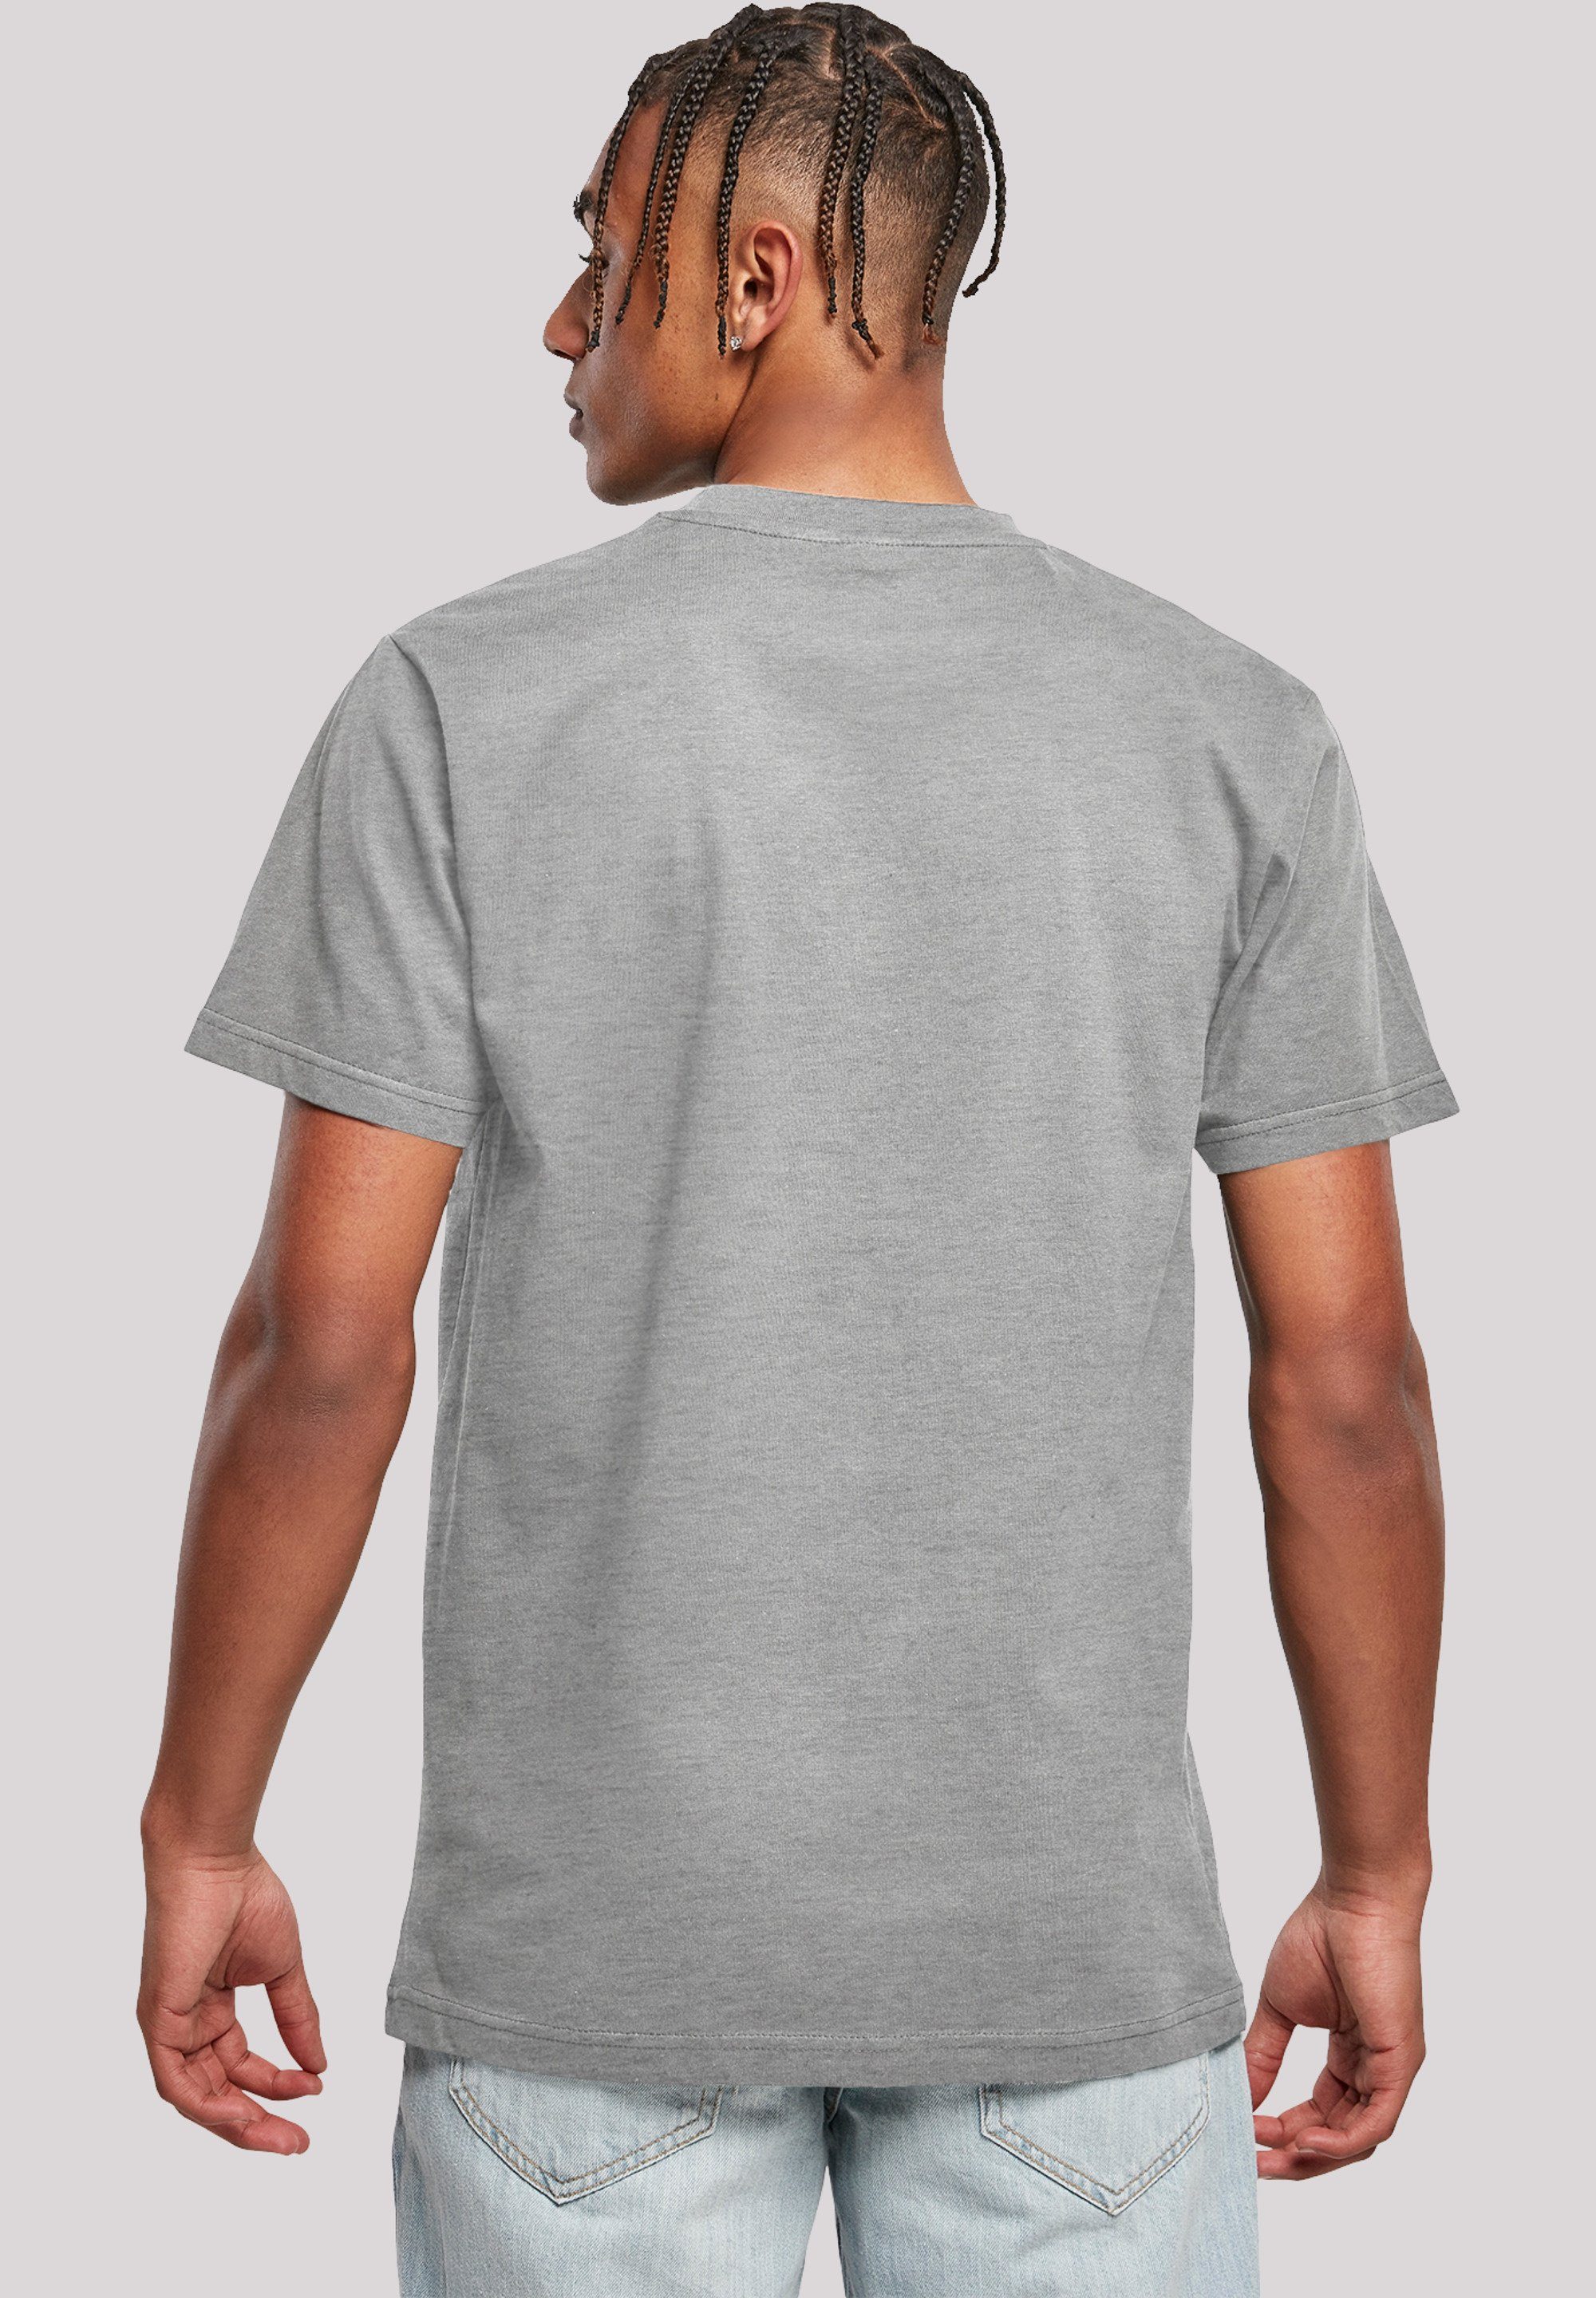 All Folks Taz grey T-Shirt Print F4NT4STIC That's Tunes Looney heather